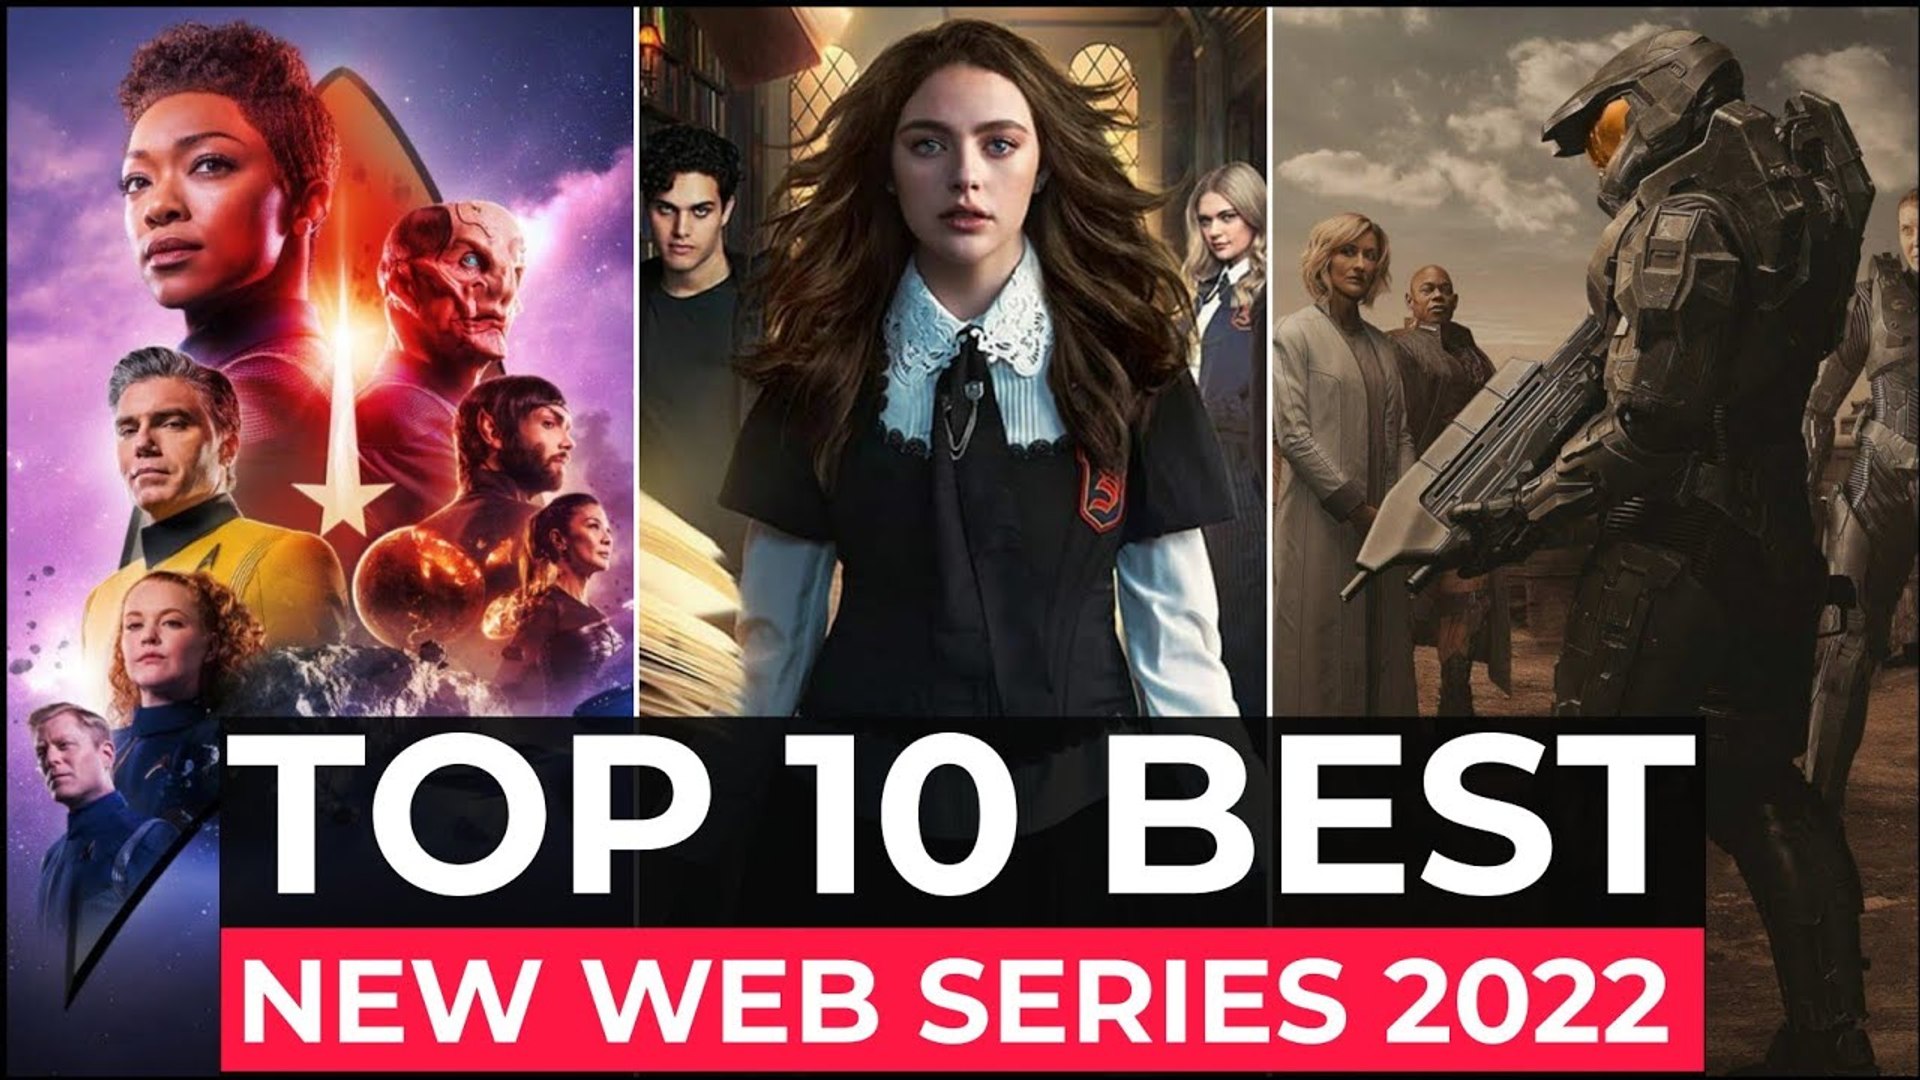 Top 10 Best Netflix Series To Watch In 2022  Best Web Series On Netflix  2022 Part 1 - video Dailymotion